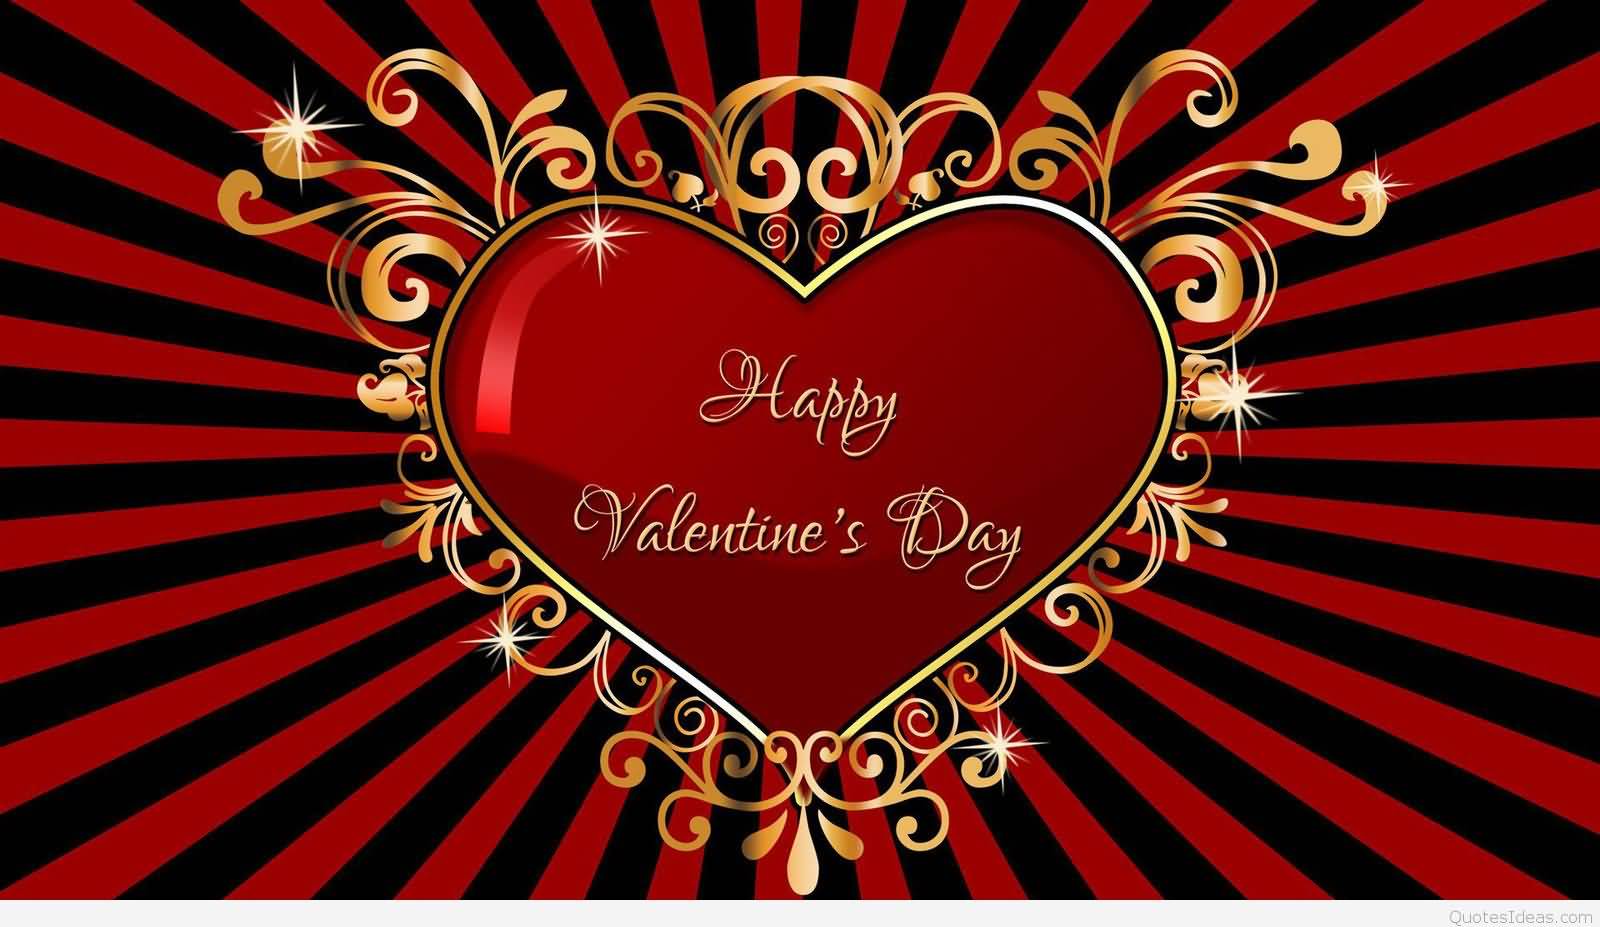 Happy Valentine's Day 2017 Heart Design